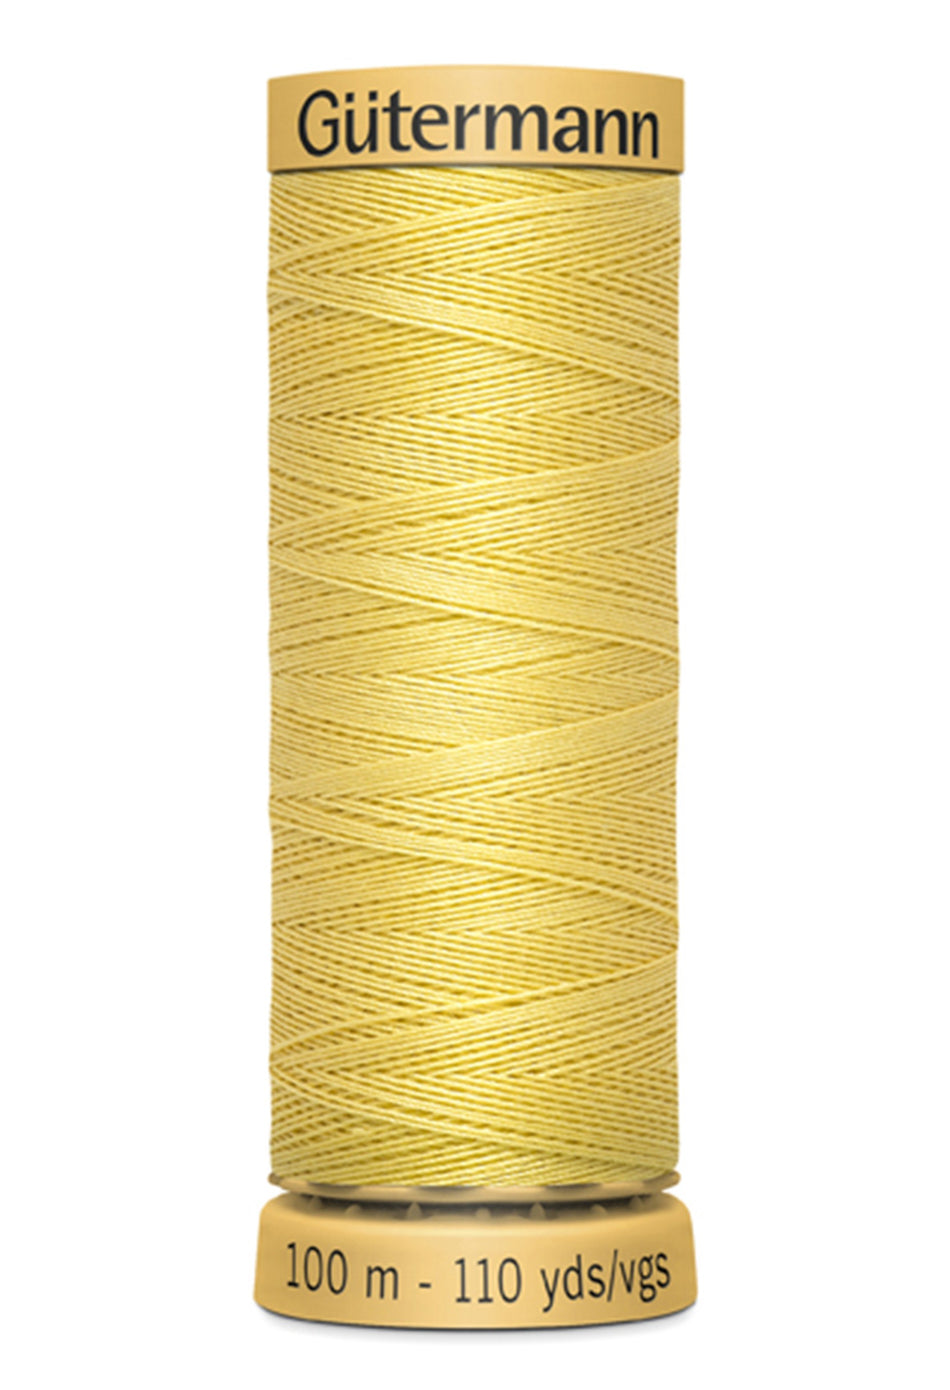 Gutermann - Natural Cotton Thread - Light Yellow